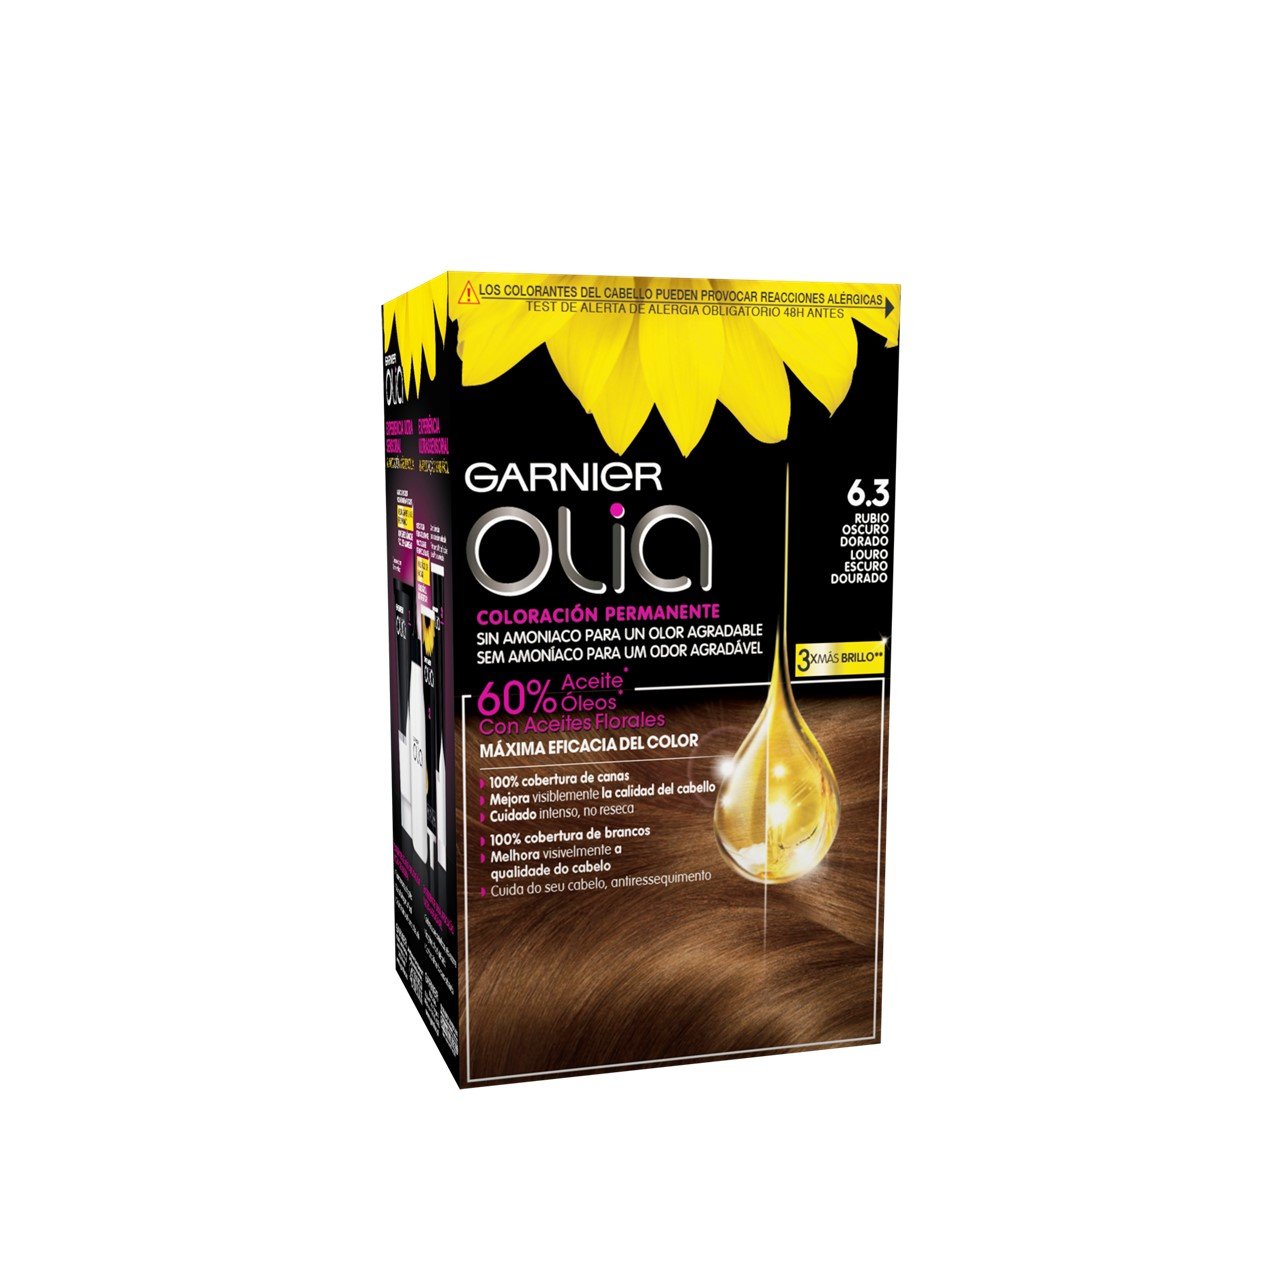 Garnier Olia 6.3 Permanent Hair Dye